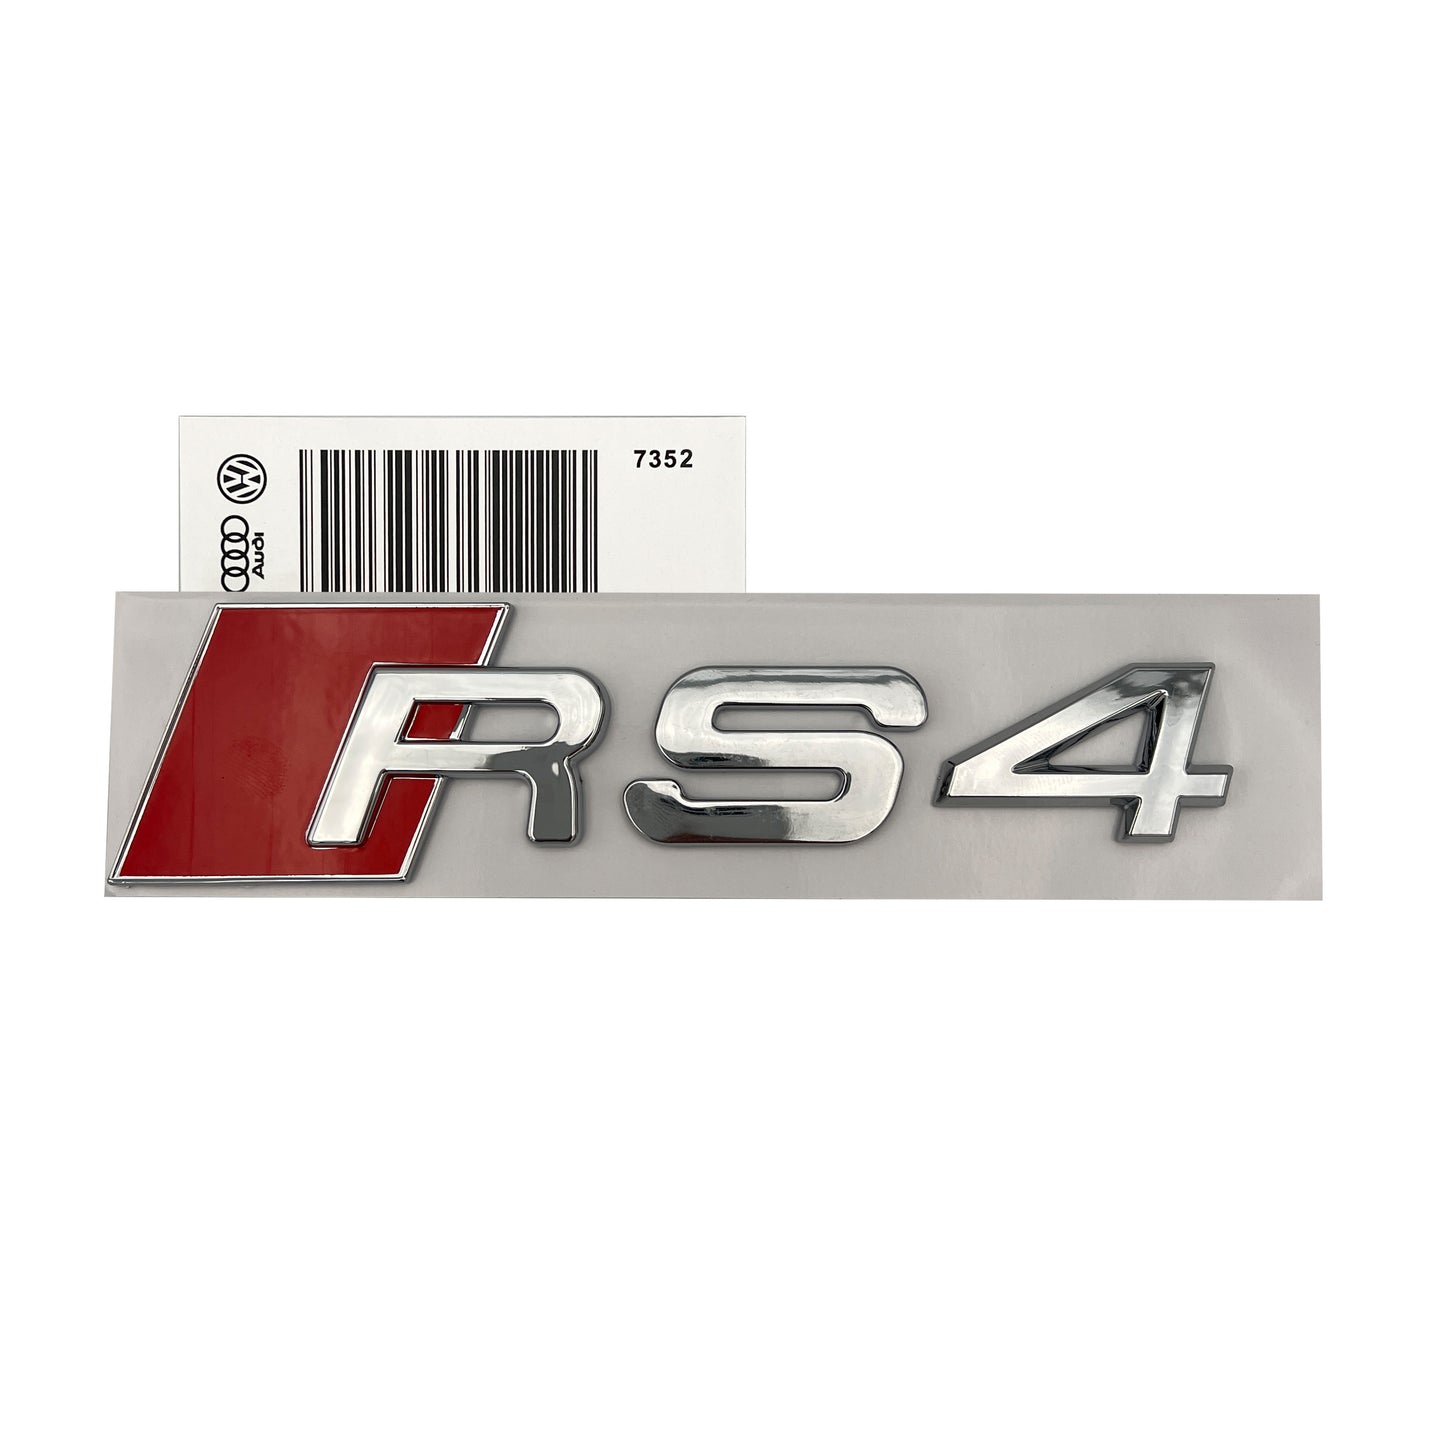 Audi RS4 Chrome Emblem 3D Badge Rear Trunk Tailgate fit Audi RS4 S4 A4 Logo